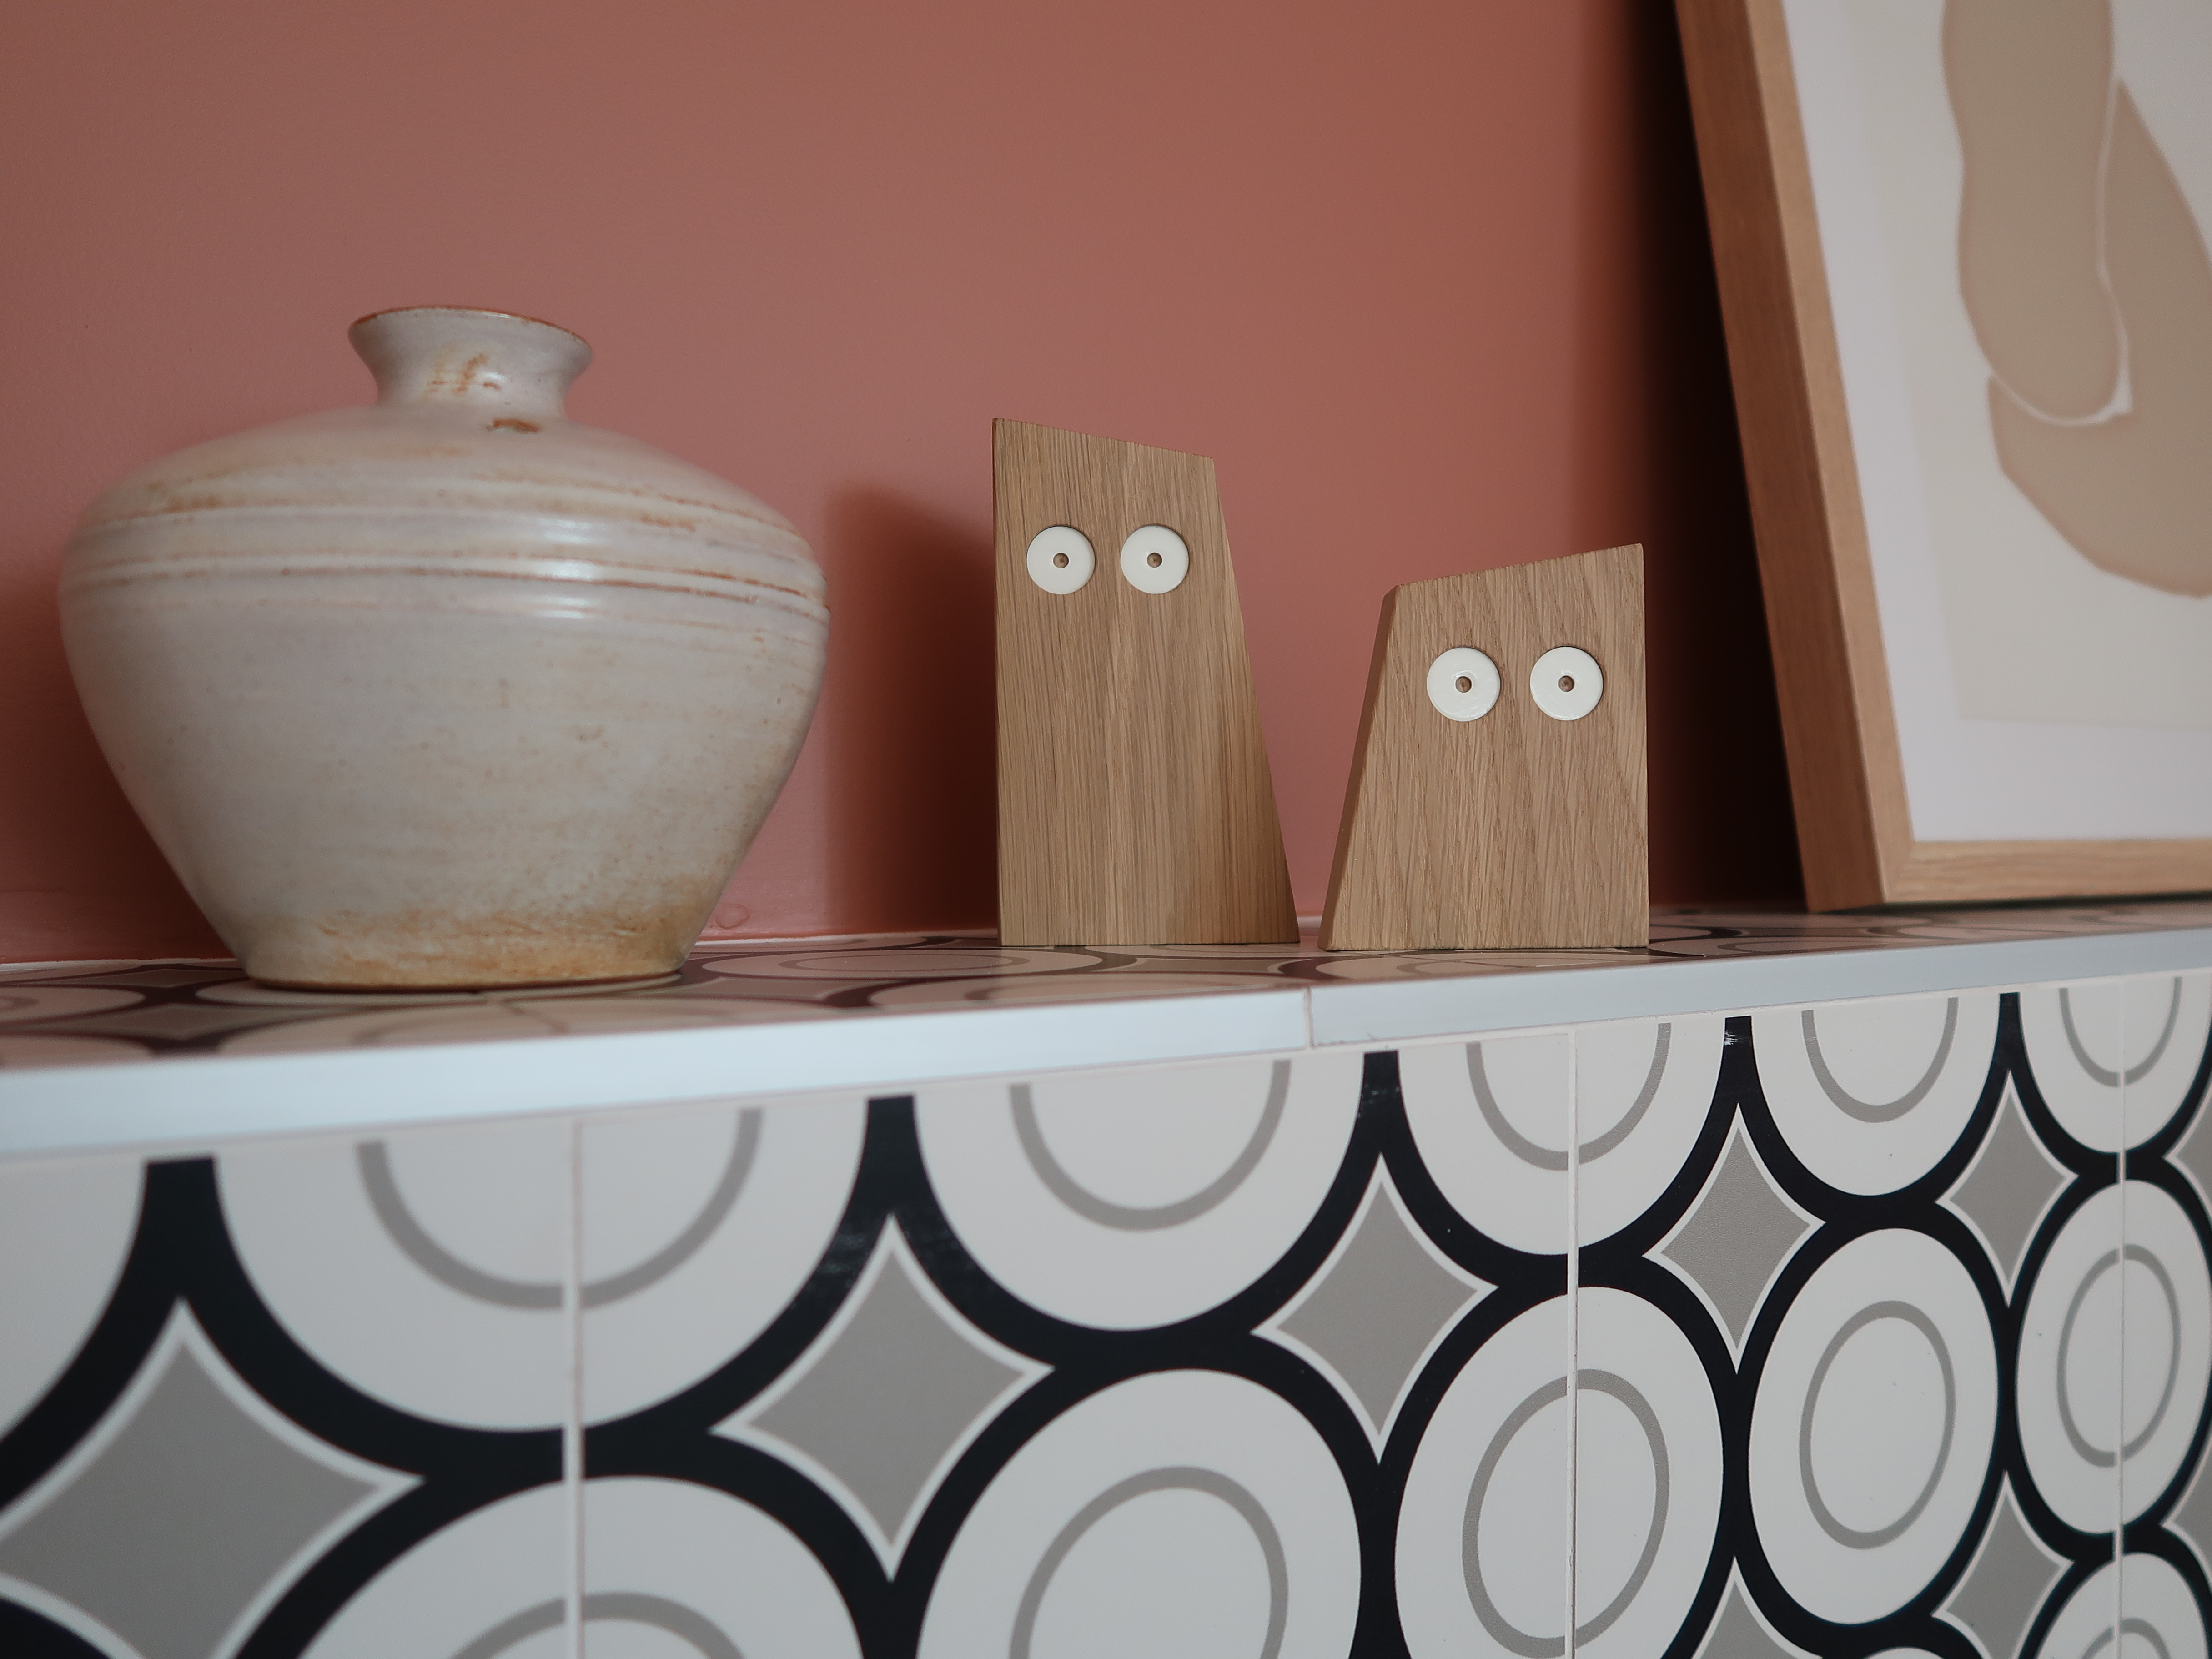 Okko Hotels Lille décoration hibou en bois